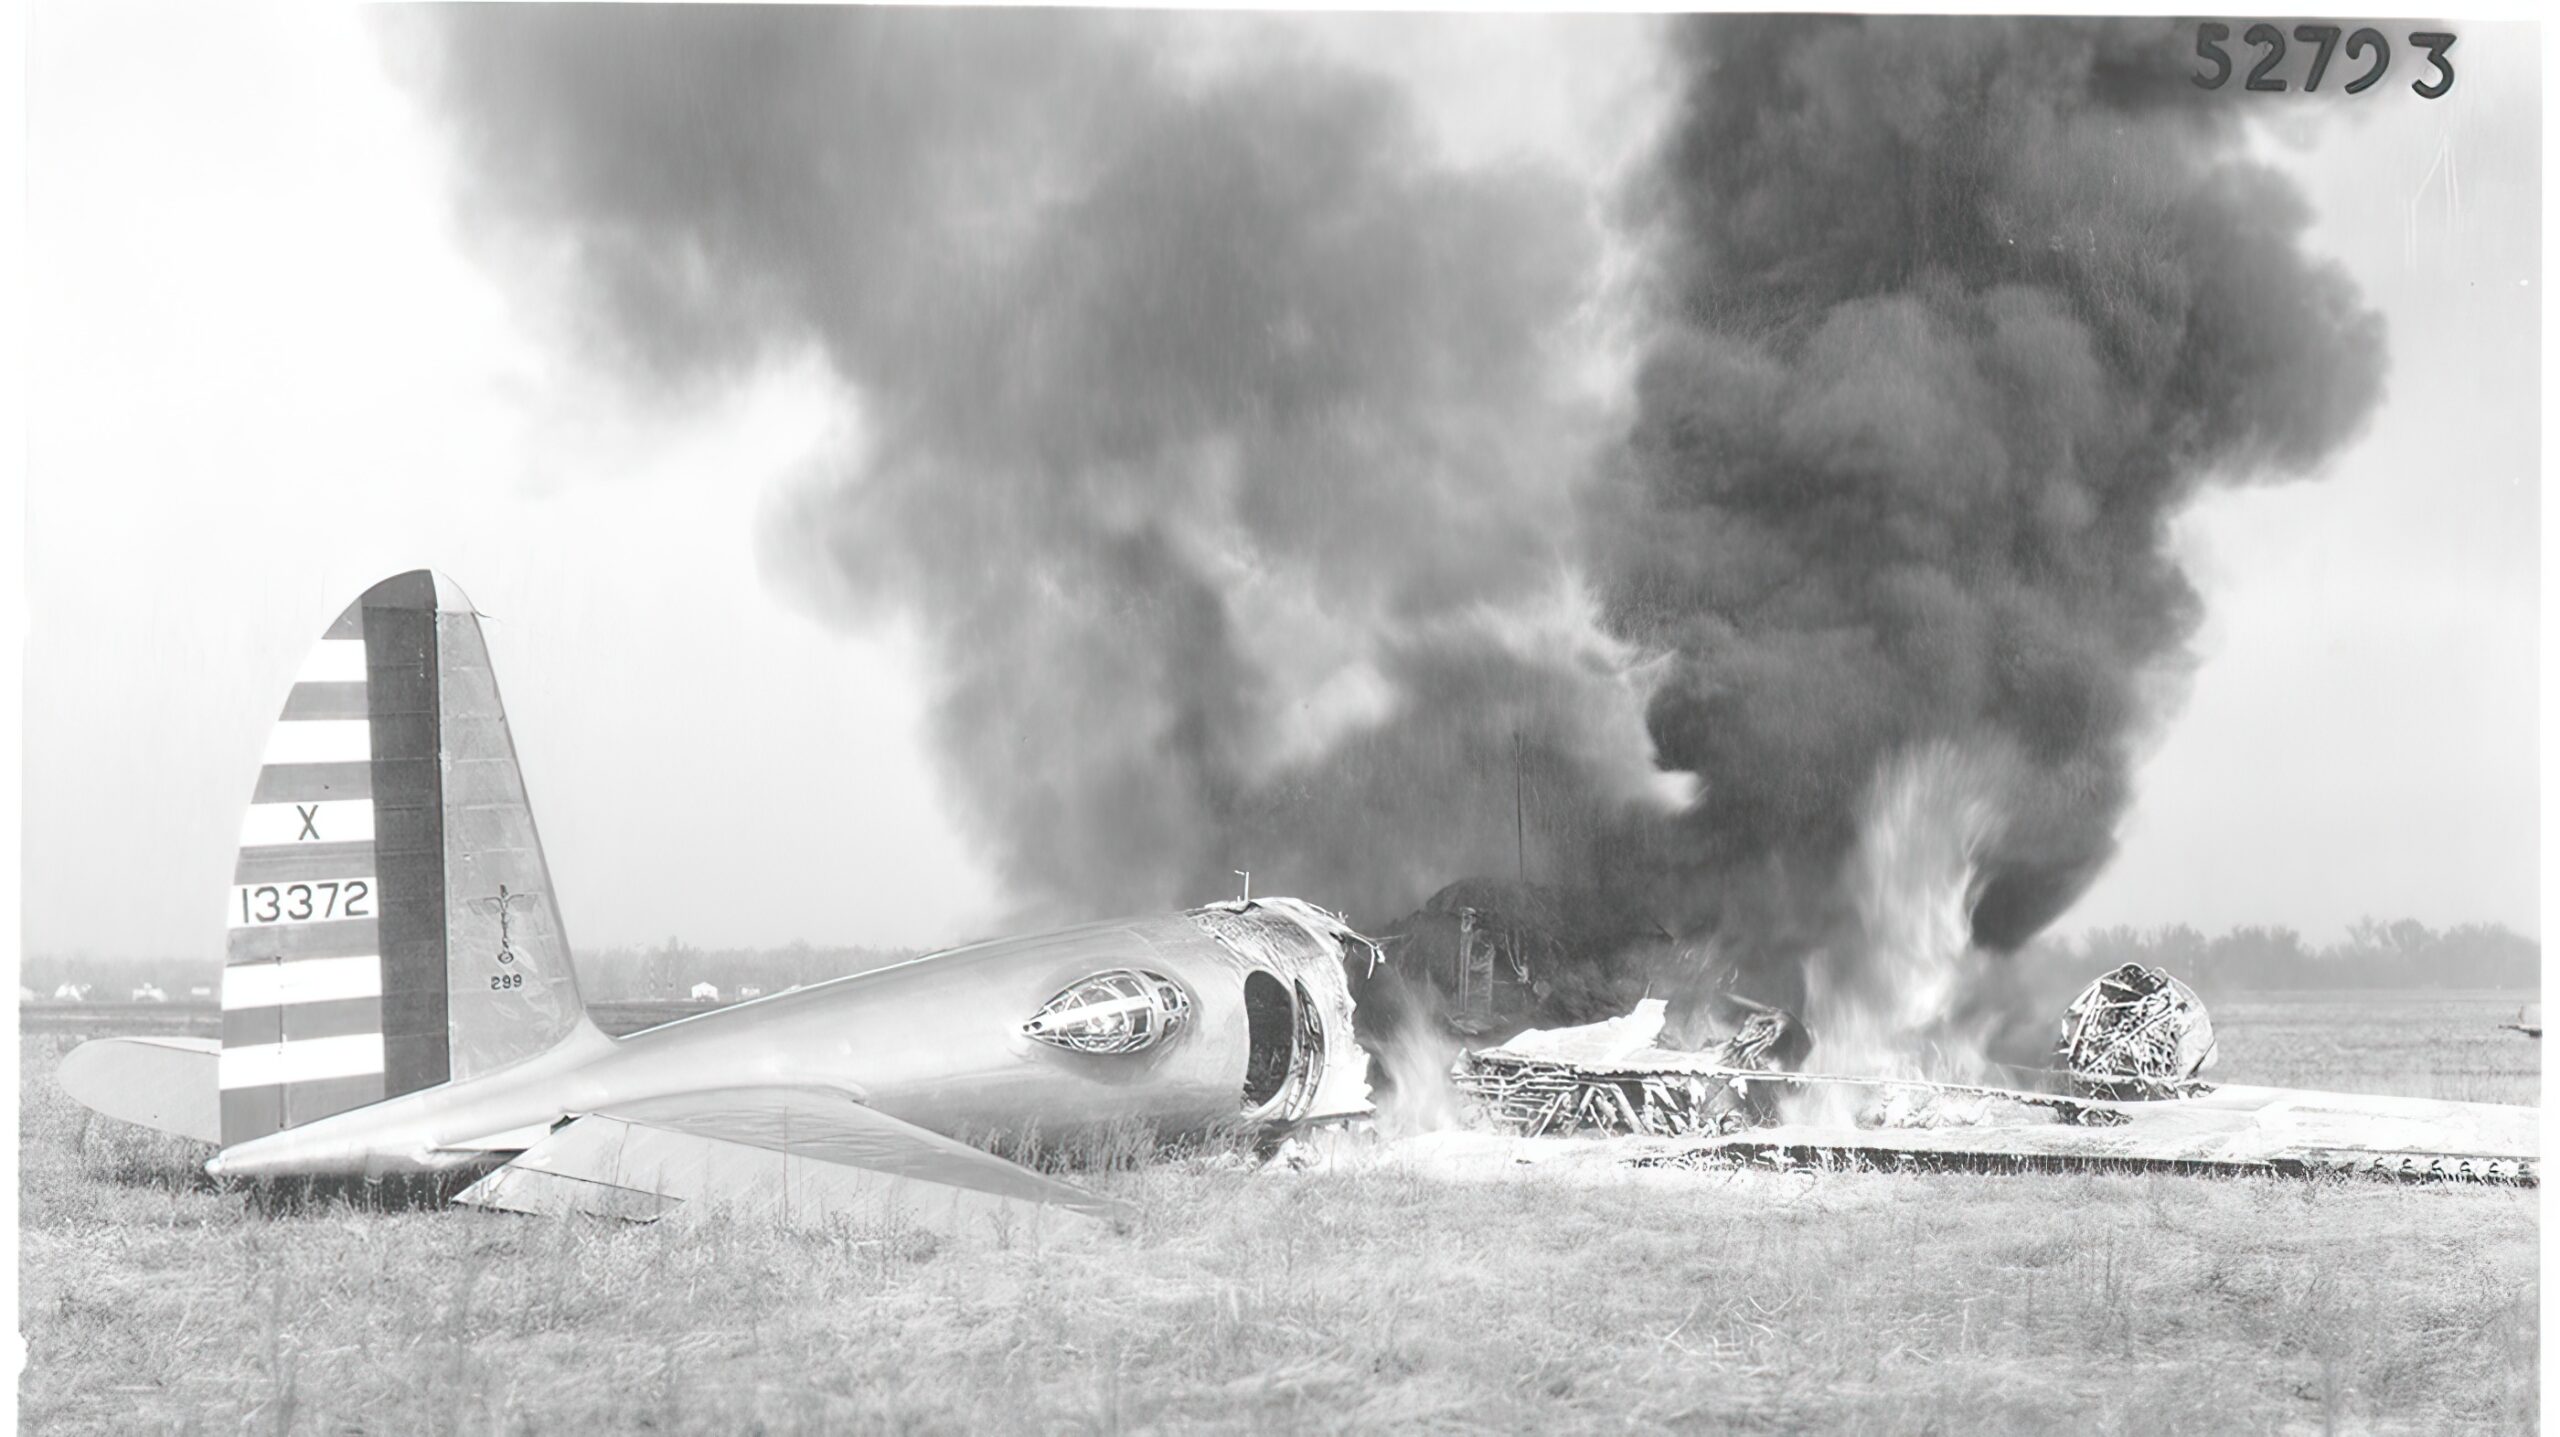 Boeing XB-17 (Model 299) crash